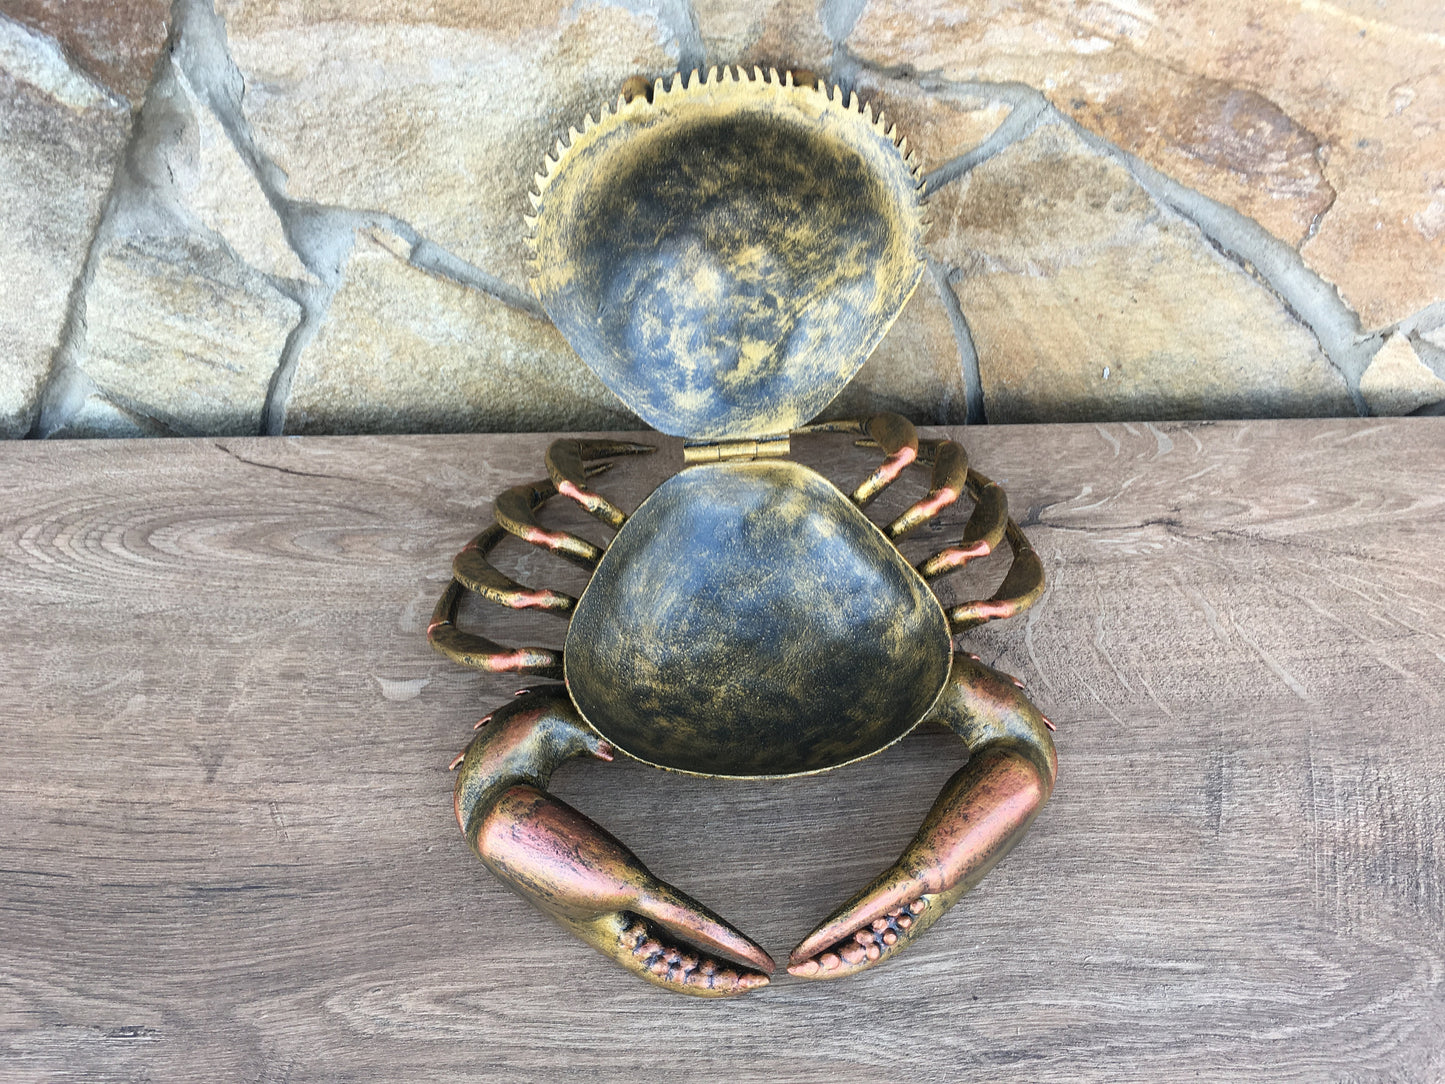 Metal ashtray, metal ash tray, crab ashtray, hand forged ashtray, hinged ashtray, crab trinket box, iron crustacean, nautical decor,crab box